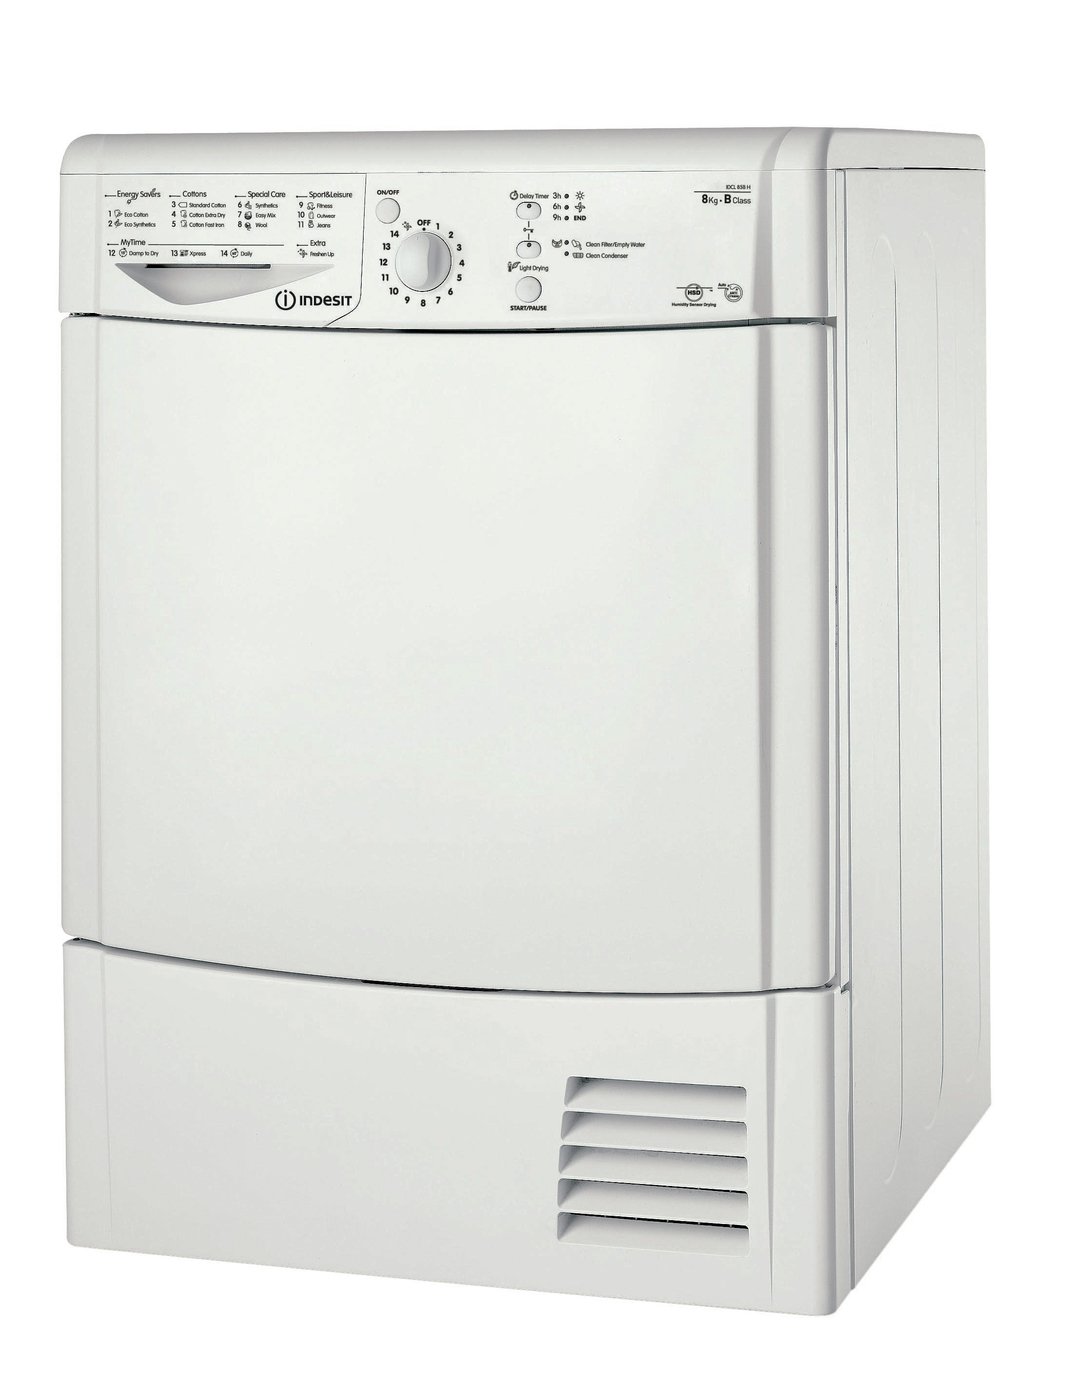 Indesit IDCL85BH 8KG Condenser Tumble Dryer - White